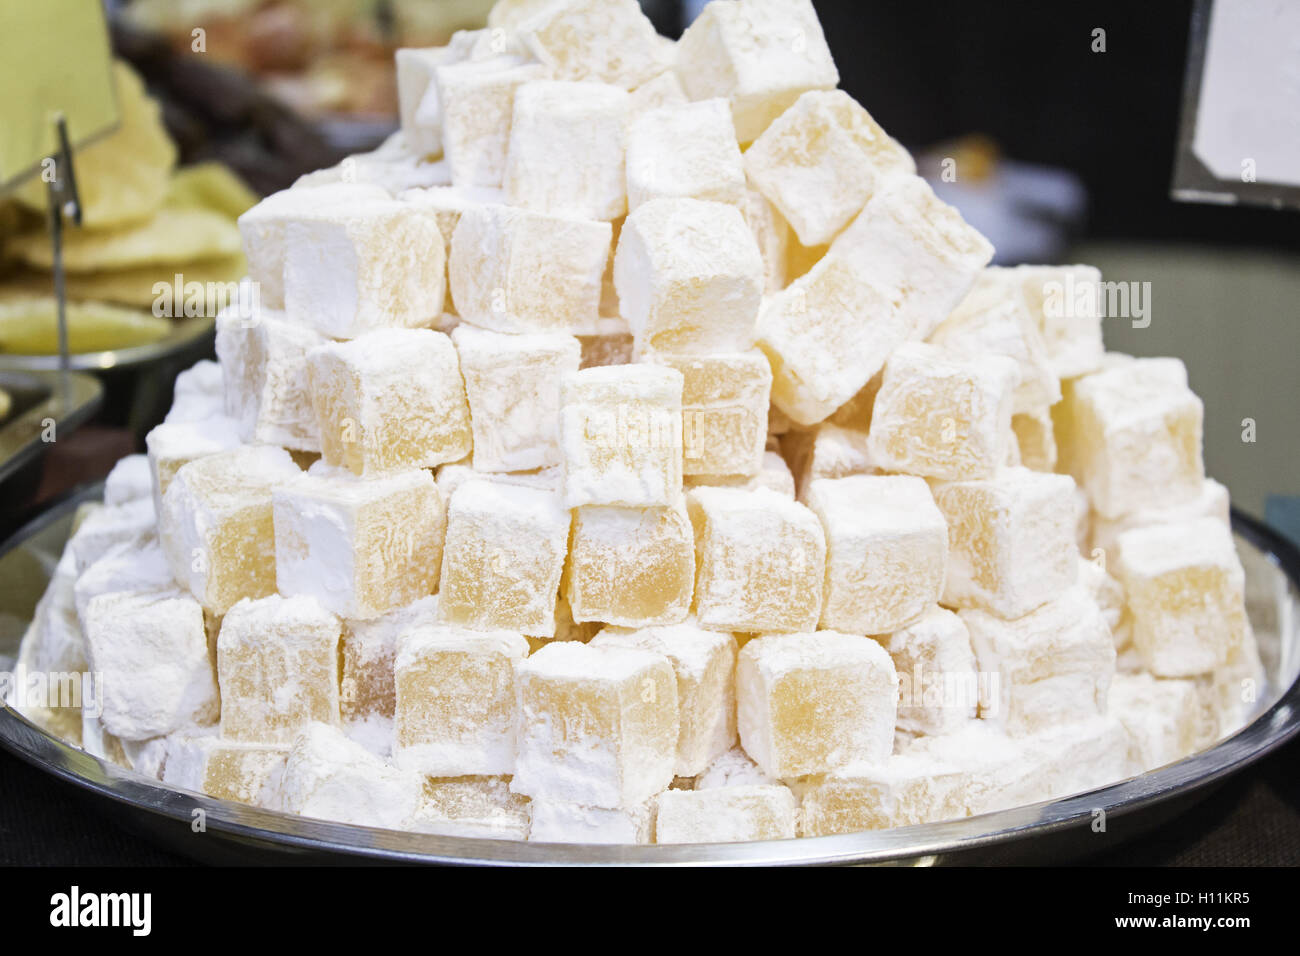 Arab sugary sweet in market supply, desserts Stock Photo